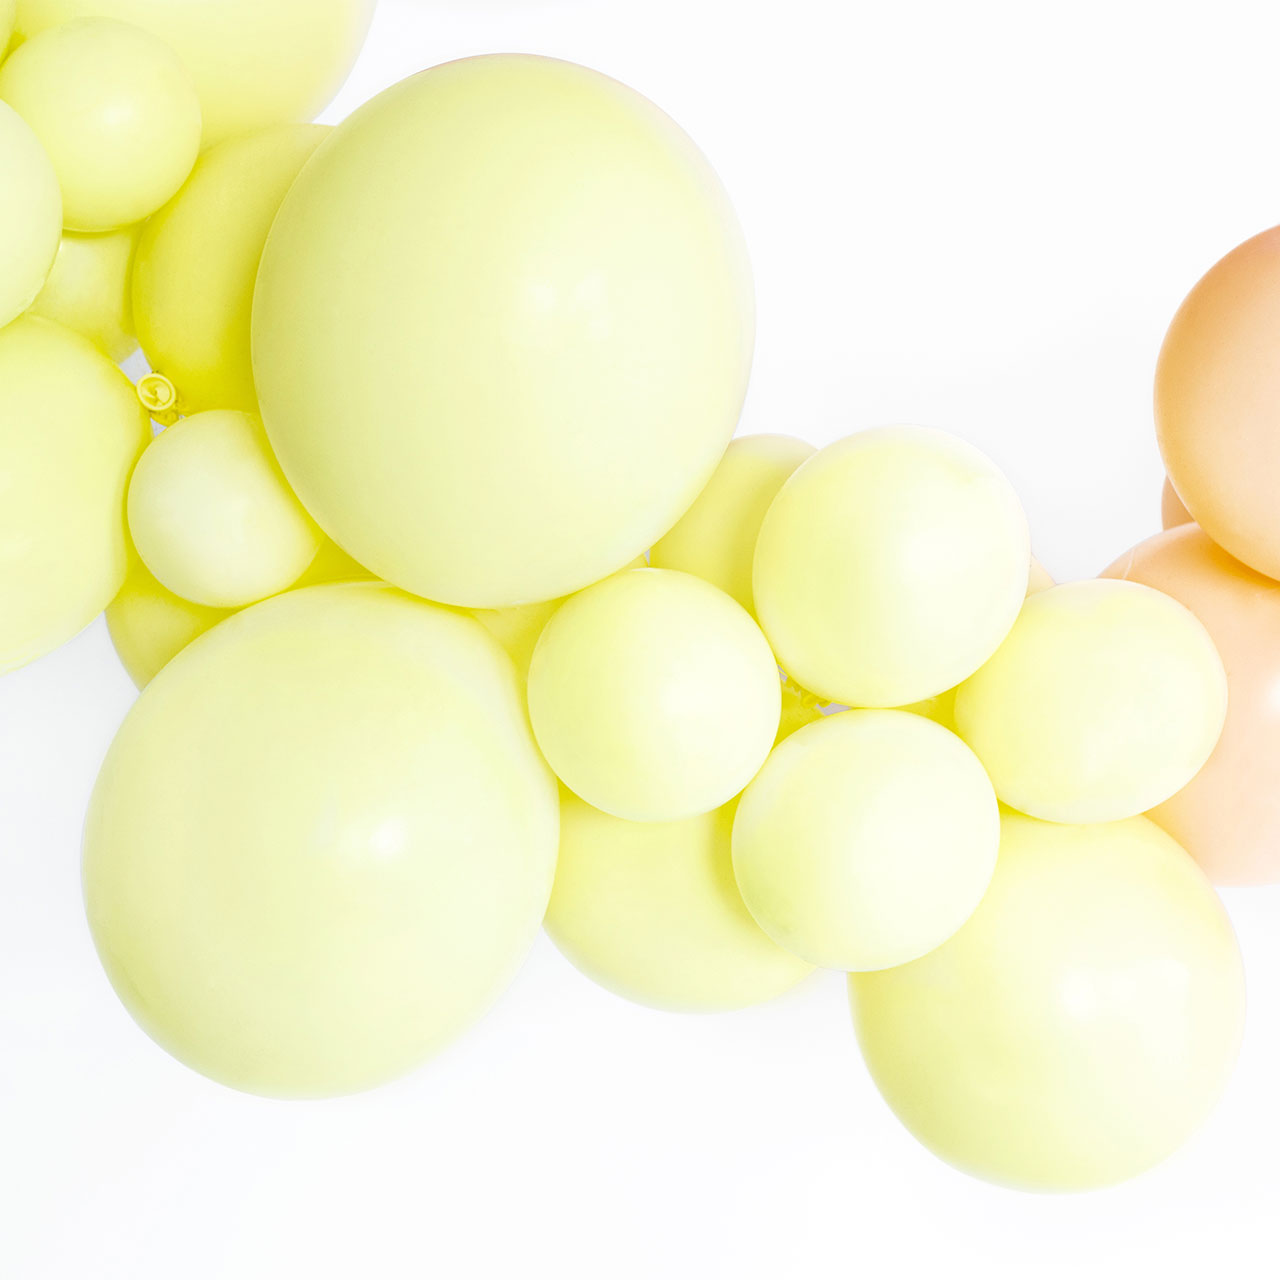 Mini Latex Balloons - Pastel Yellow